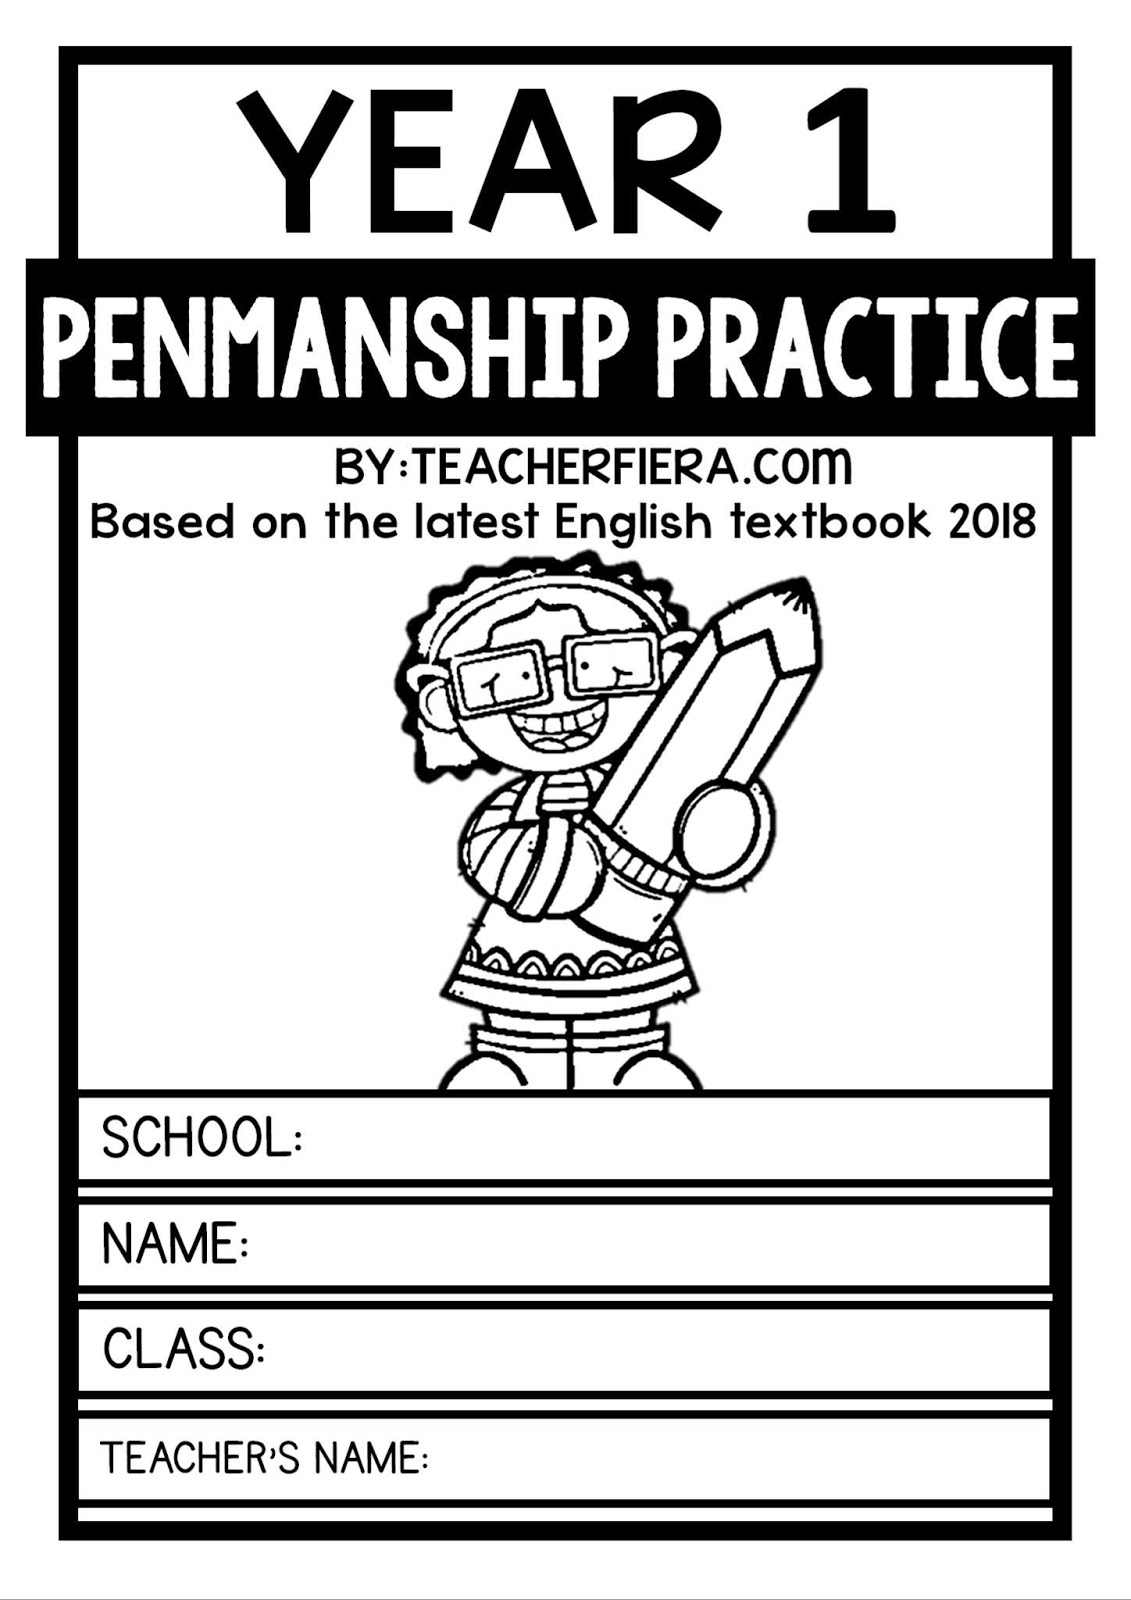 teacherfiera-year-1-penmanship-practice-module-based-on-the